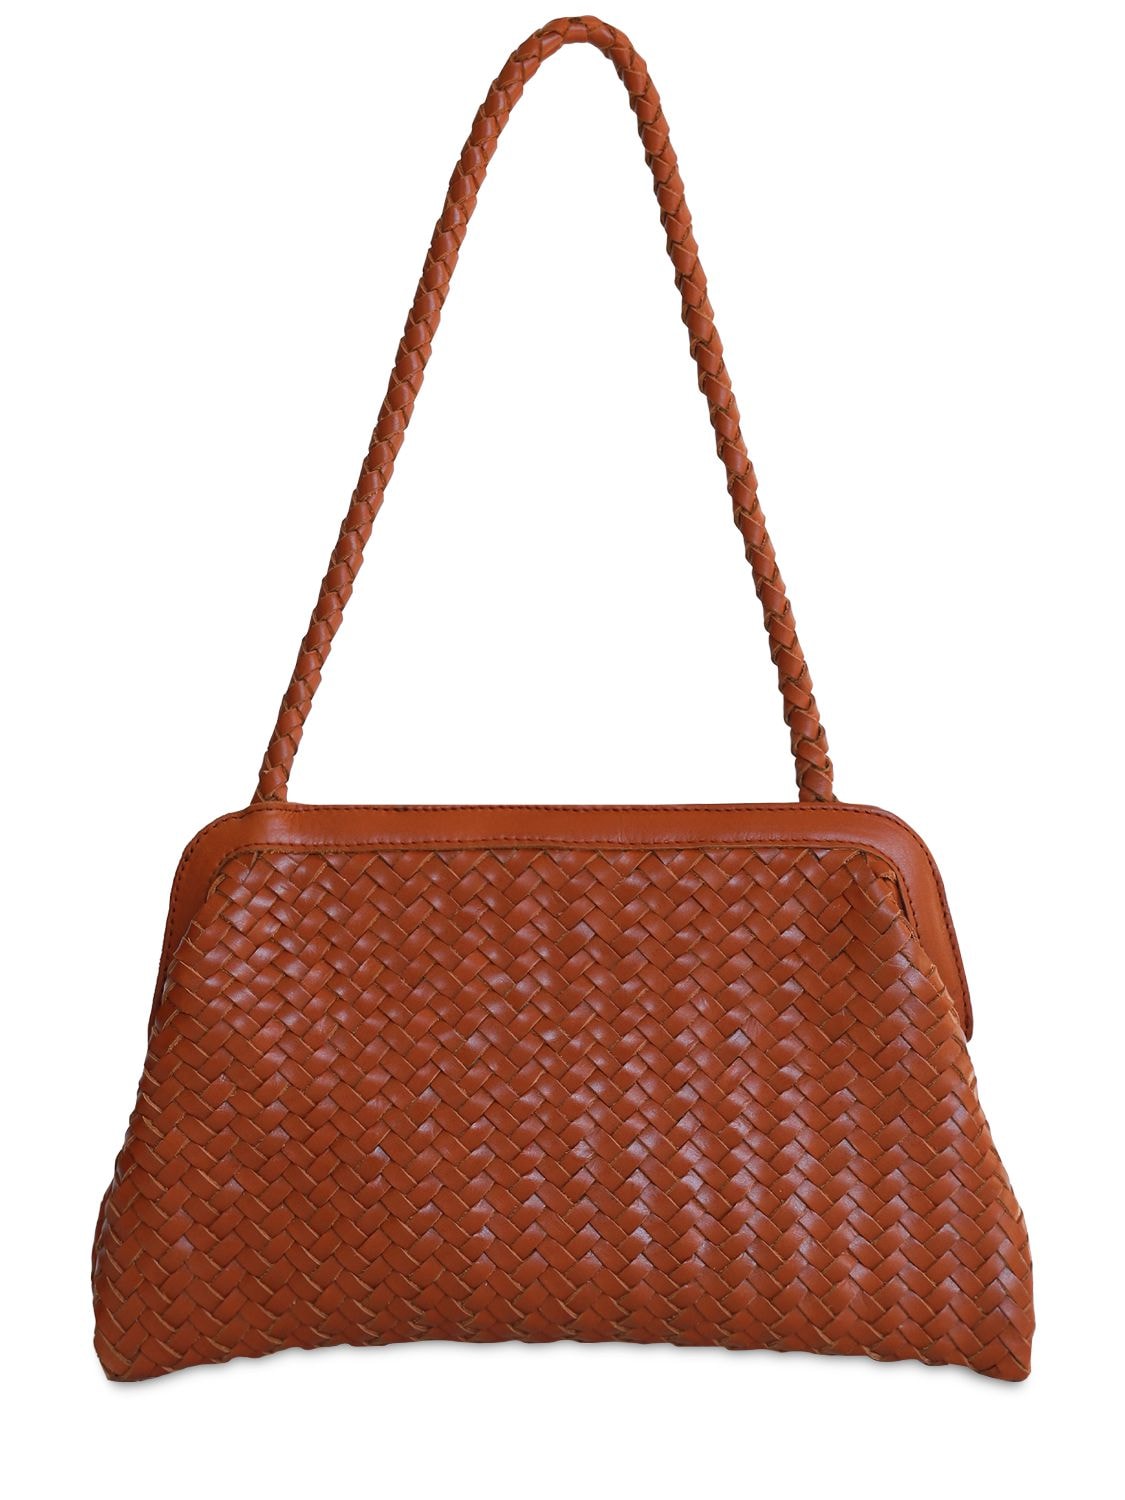 Bembien Le Sac Woven Leather Shoulder Bag In Sienna